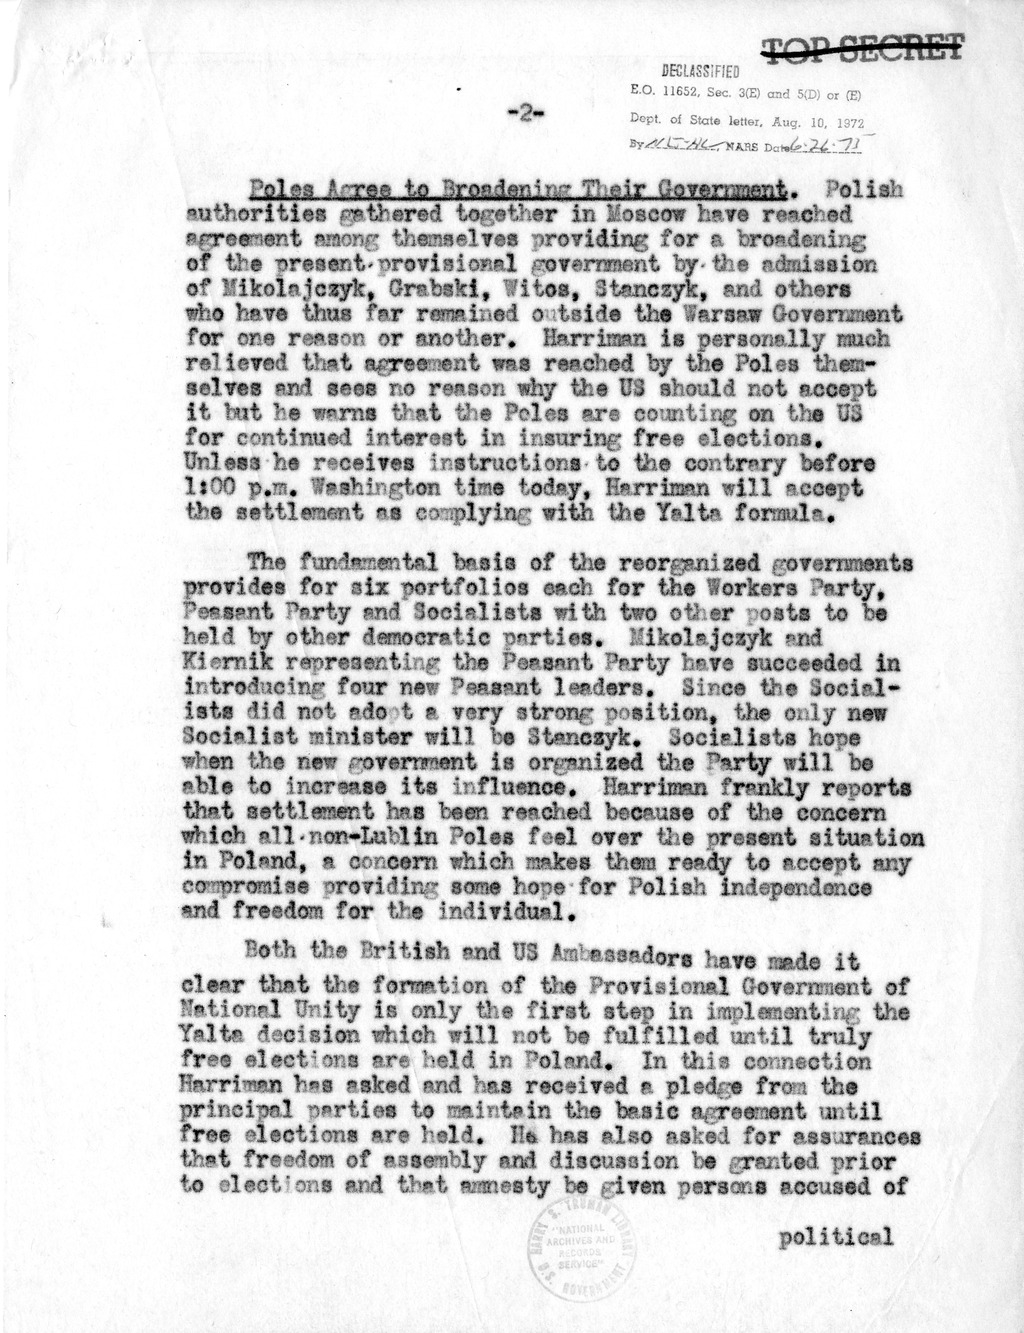 Memorandum from Acting Secretary of State Joseph Grew to President Harry S. Truman, Current Foreign Developments